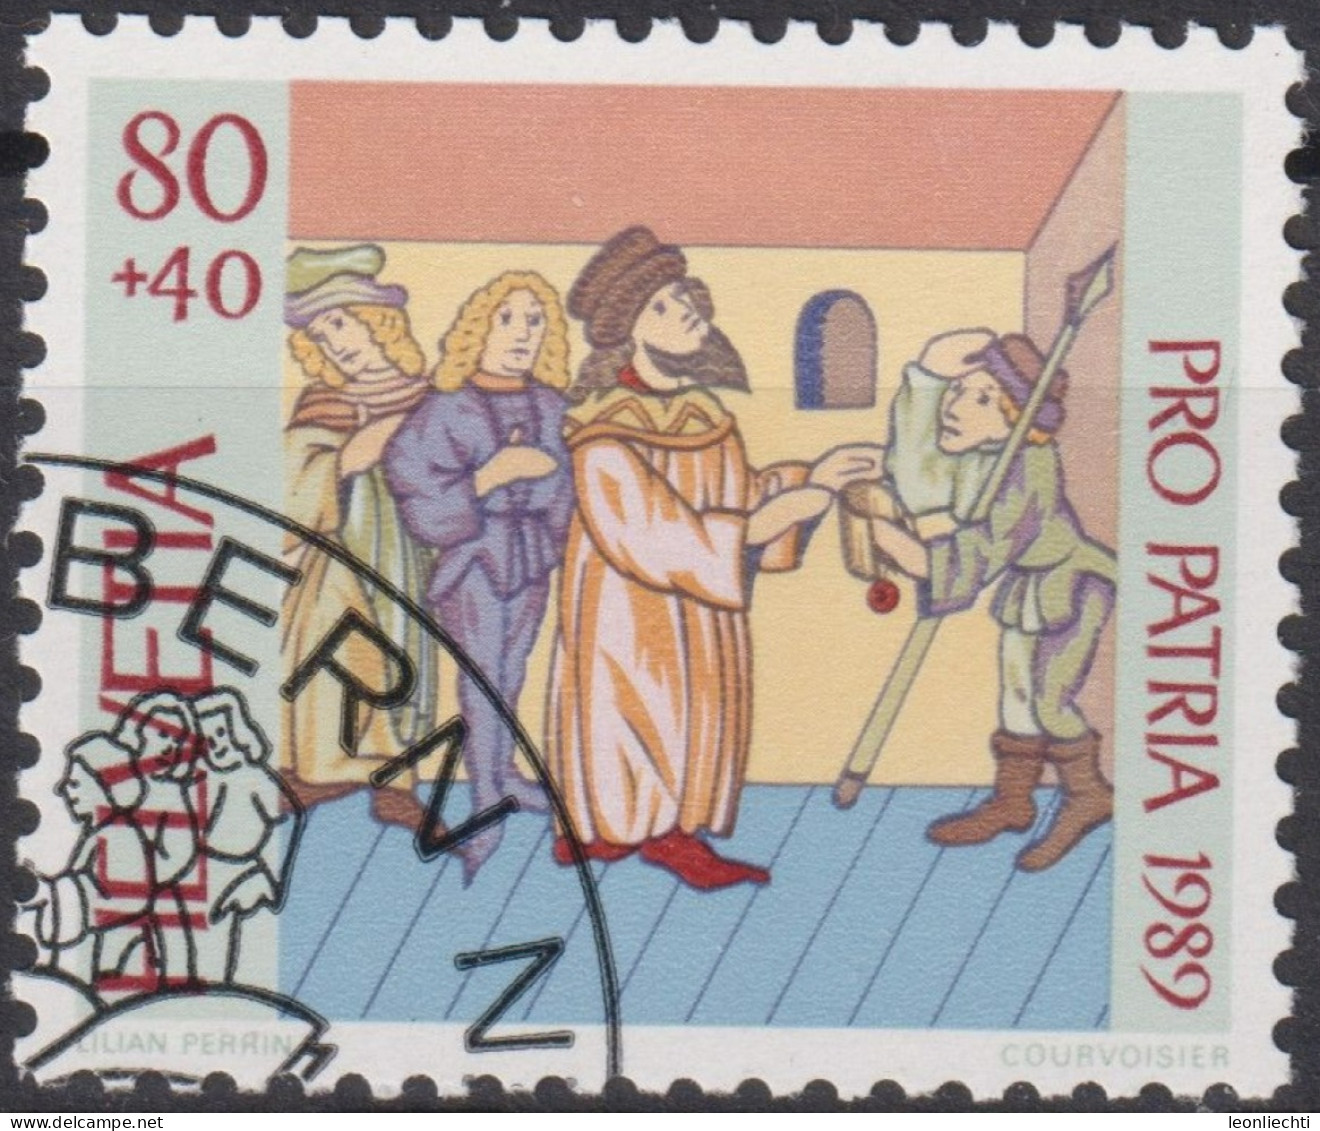 1989 Schweiz Pro Patria, Bilderchronik, Edlibach Chronik 1485-86 ⵙ Zum:CH B225, Mi:CH 1395, Yt: CH 1321 - Used Stamps